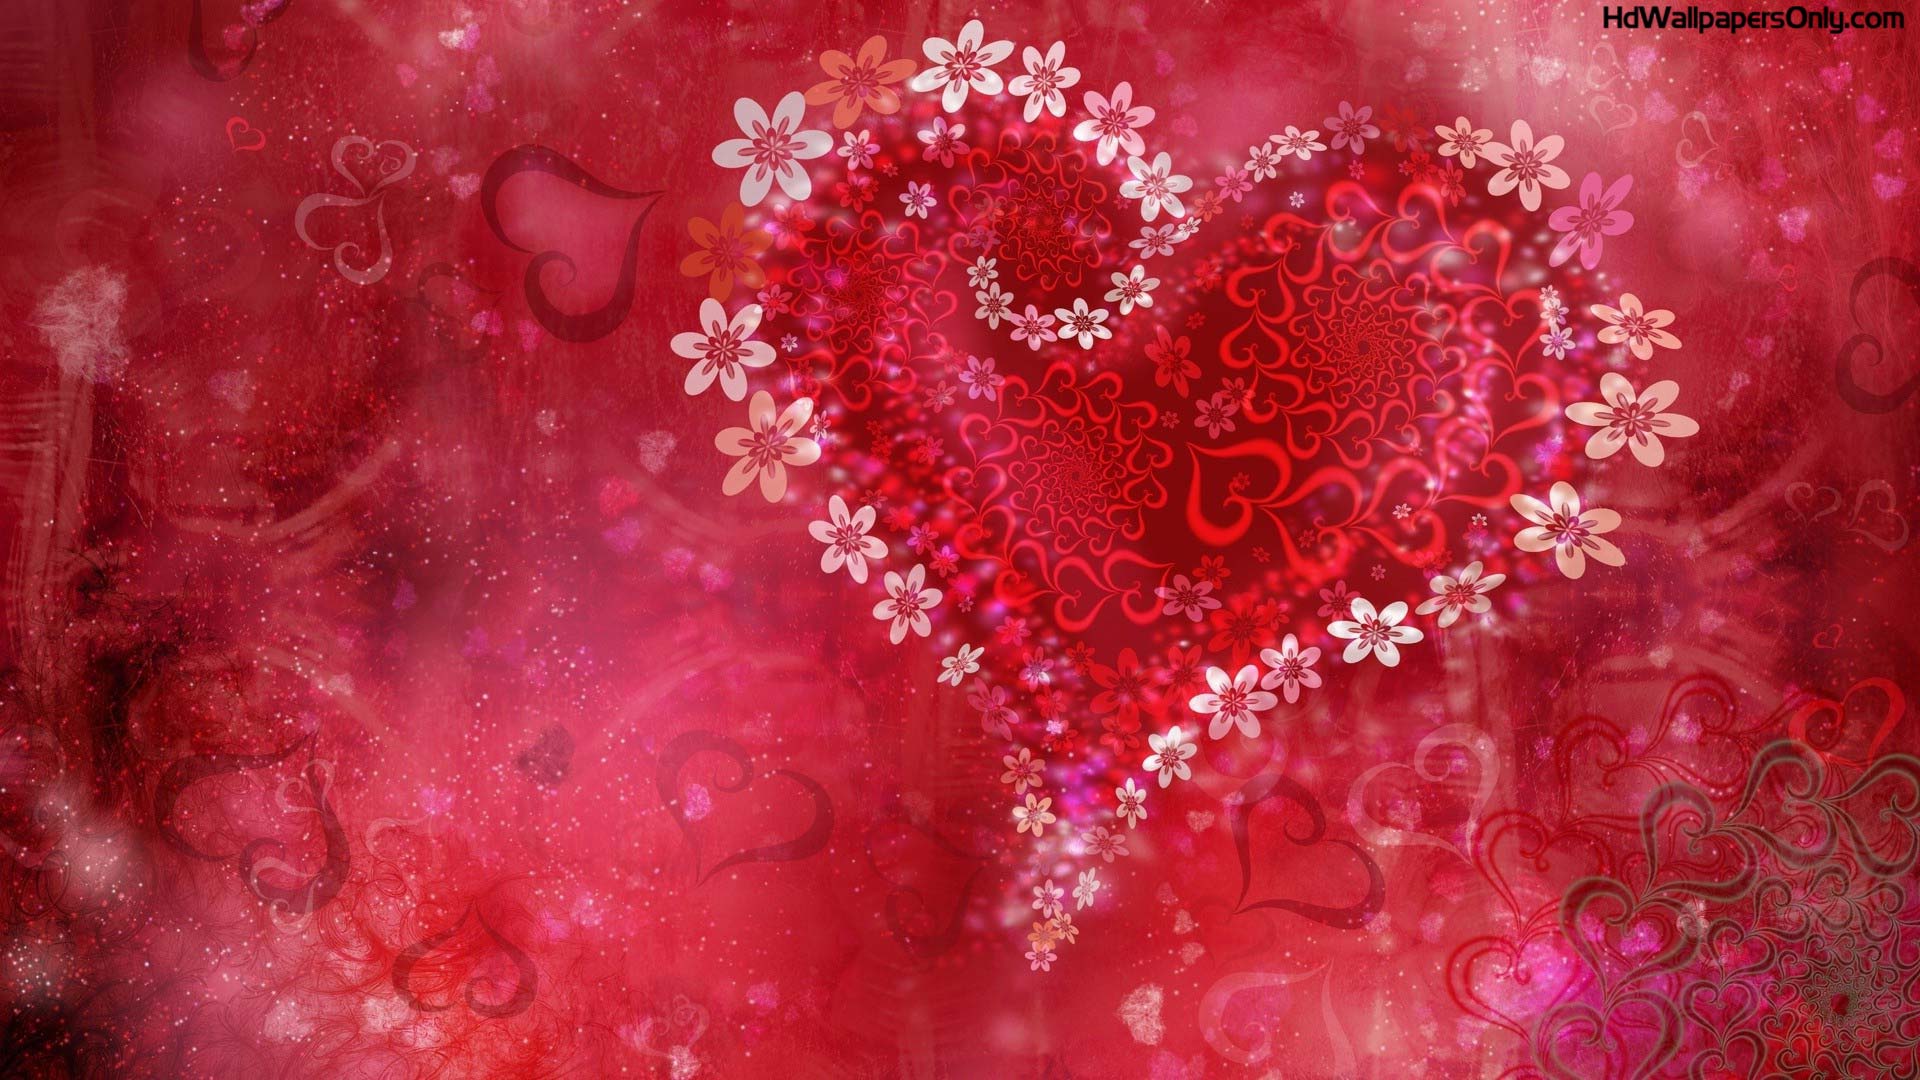 Heart Background Image